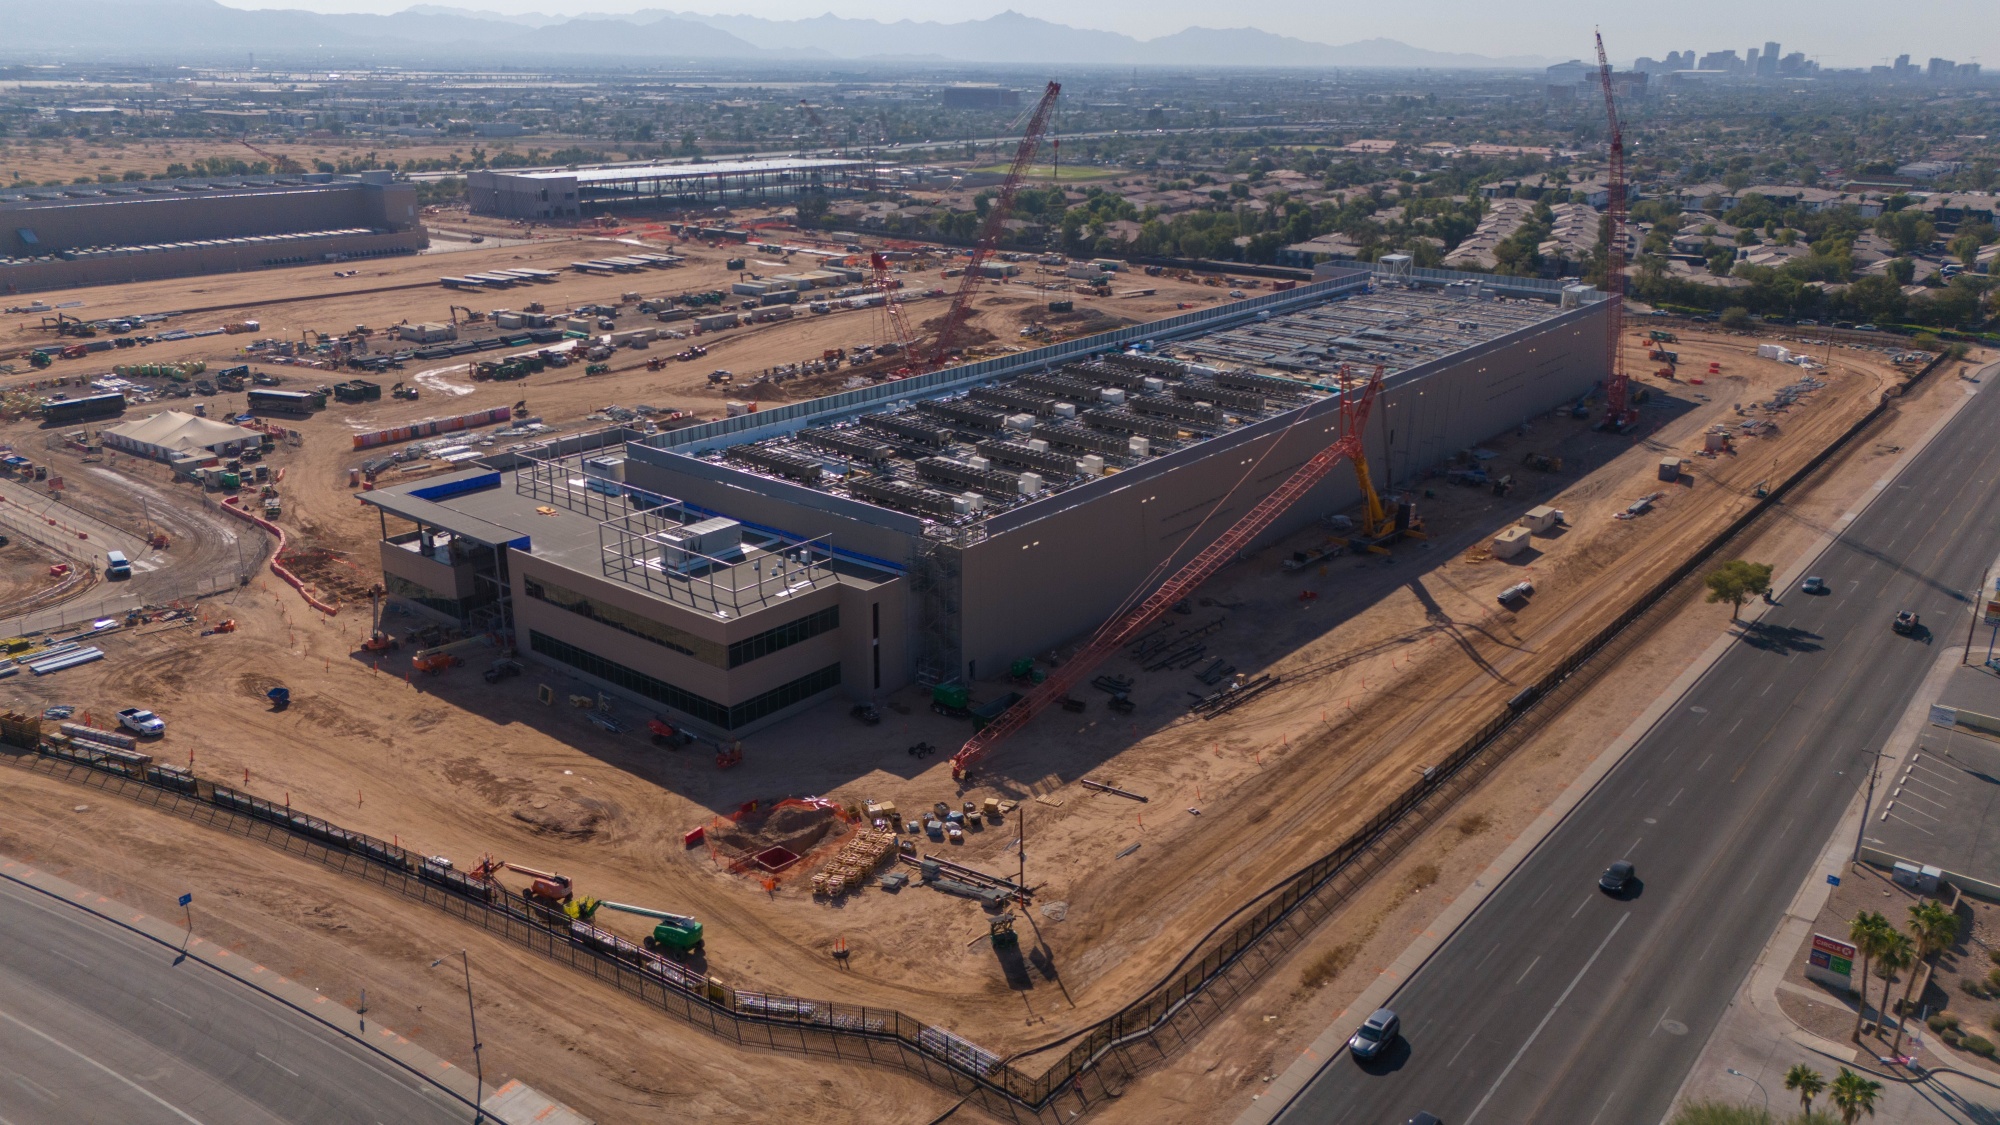 A QTS data center under construction in Phoenix.